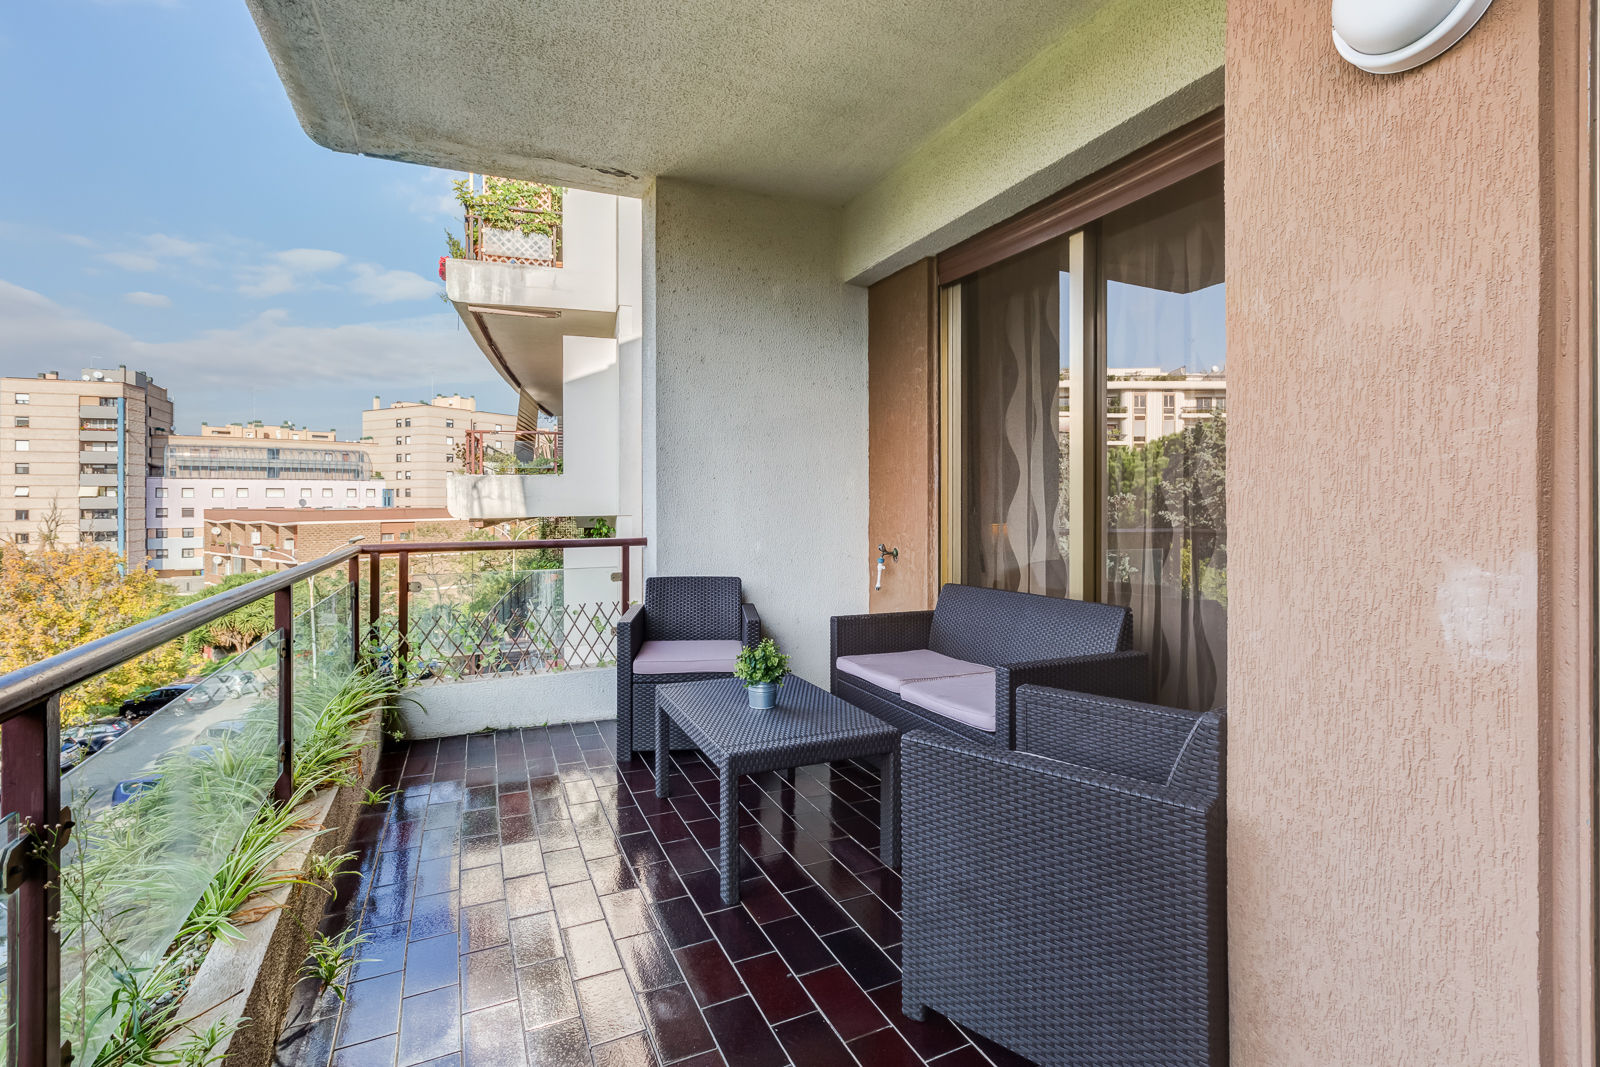 Appartamento Laurentina - Roma, Luca Tranquilli - Fotografo Luca Tranquilli - Fotografo Balcones y terrazas de estilo moderno